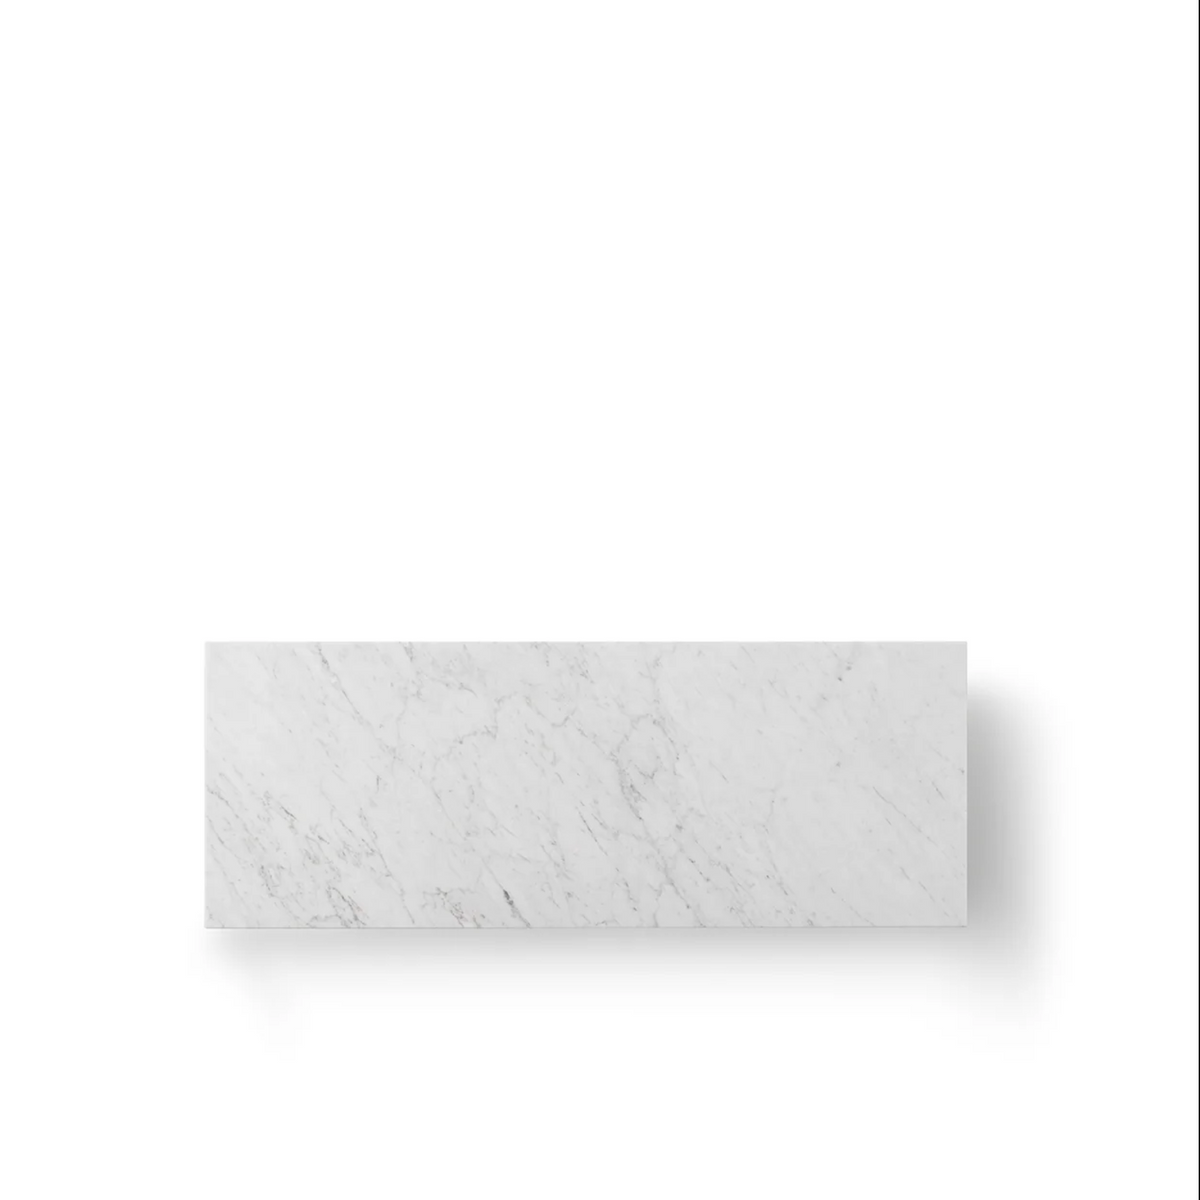 Plinth Bridge Table - White Marble Carrara